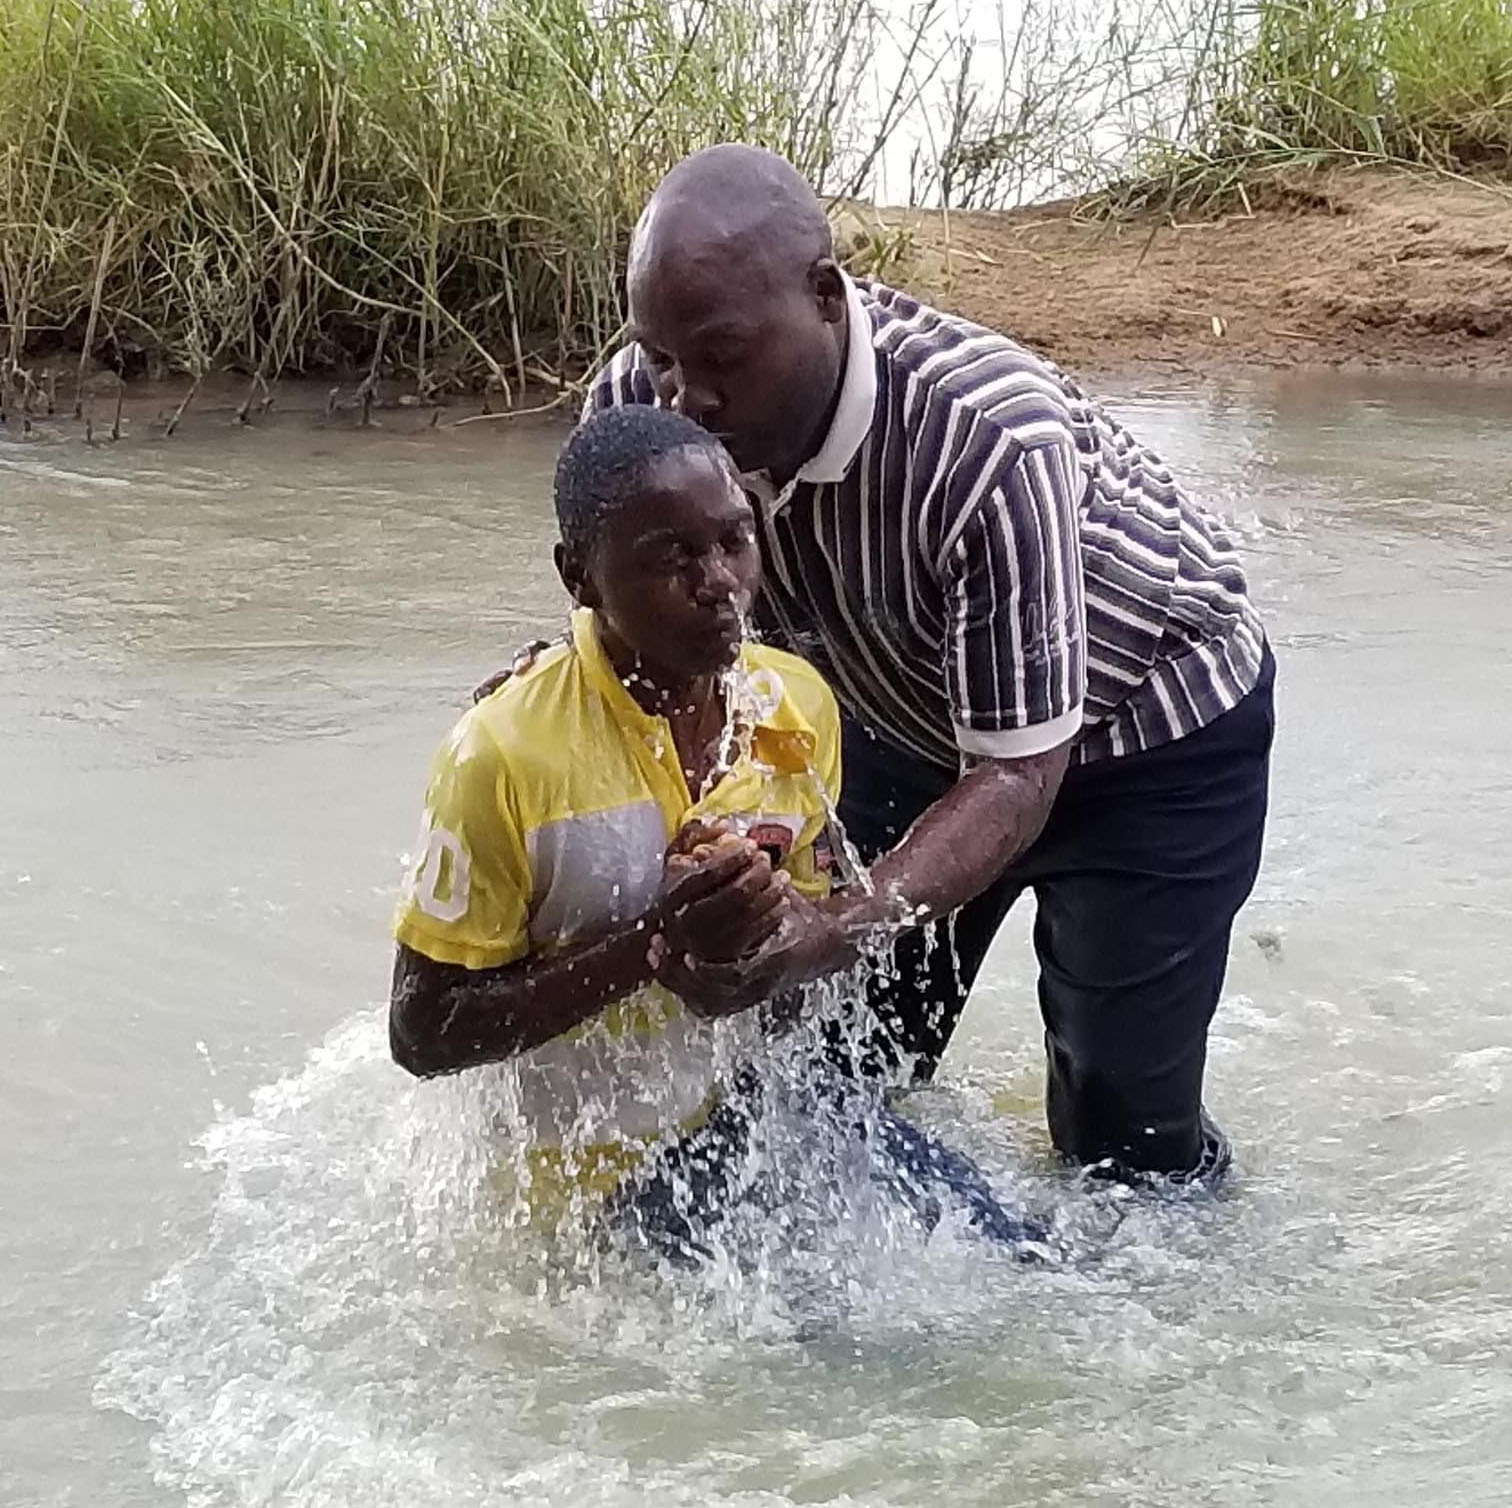 river baptism, boy getting baptized in river